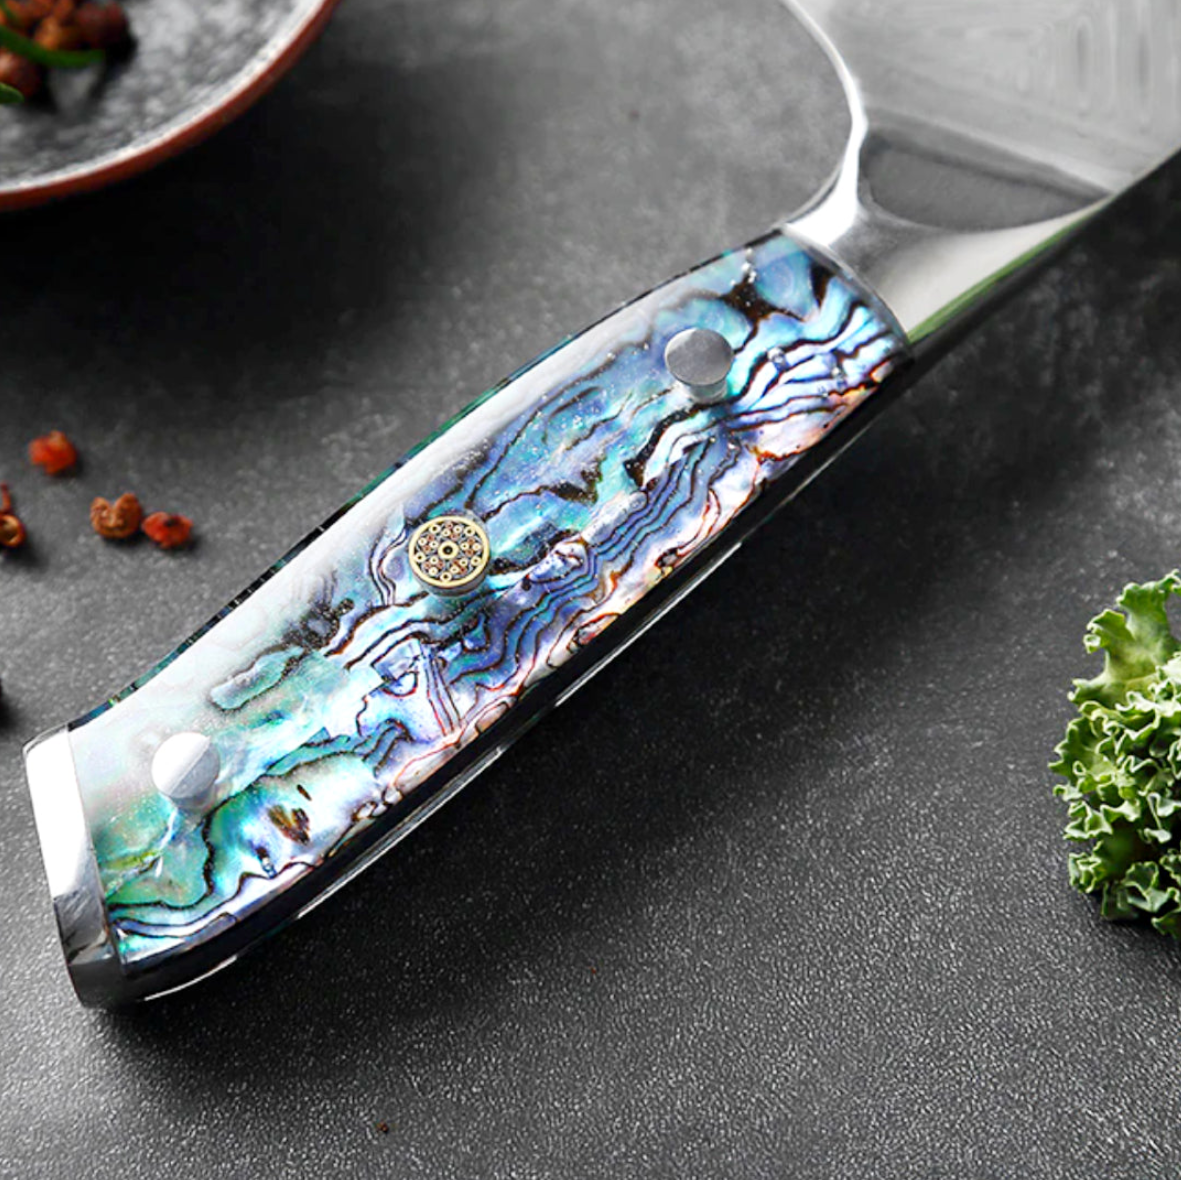 Kameko (かめこう) Damascus Steel Chef Knife with Abalone Handle